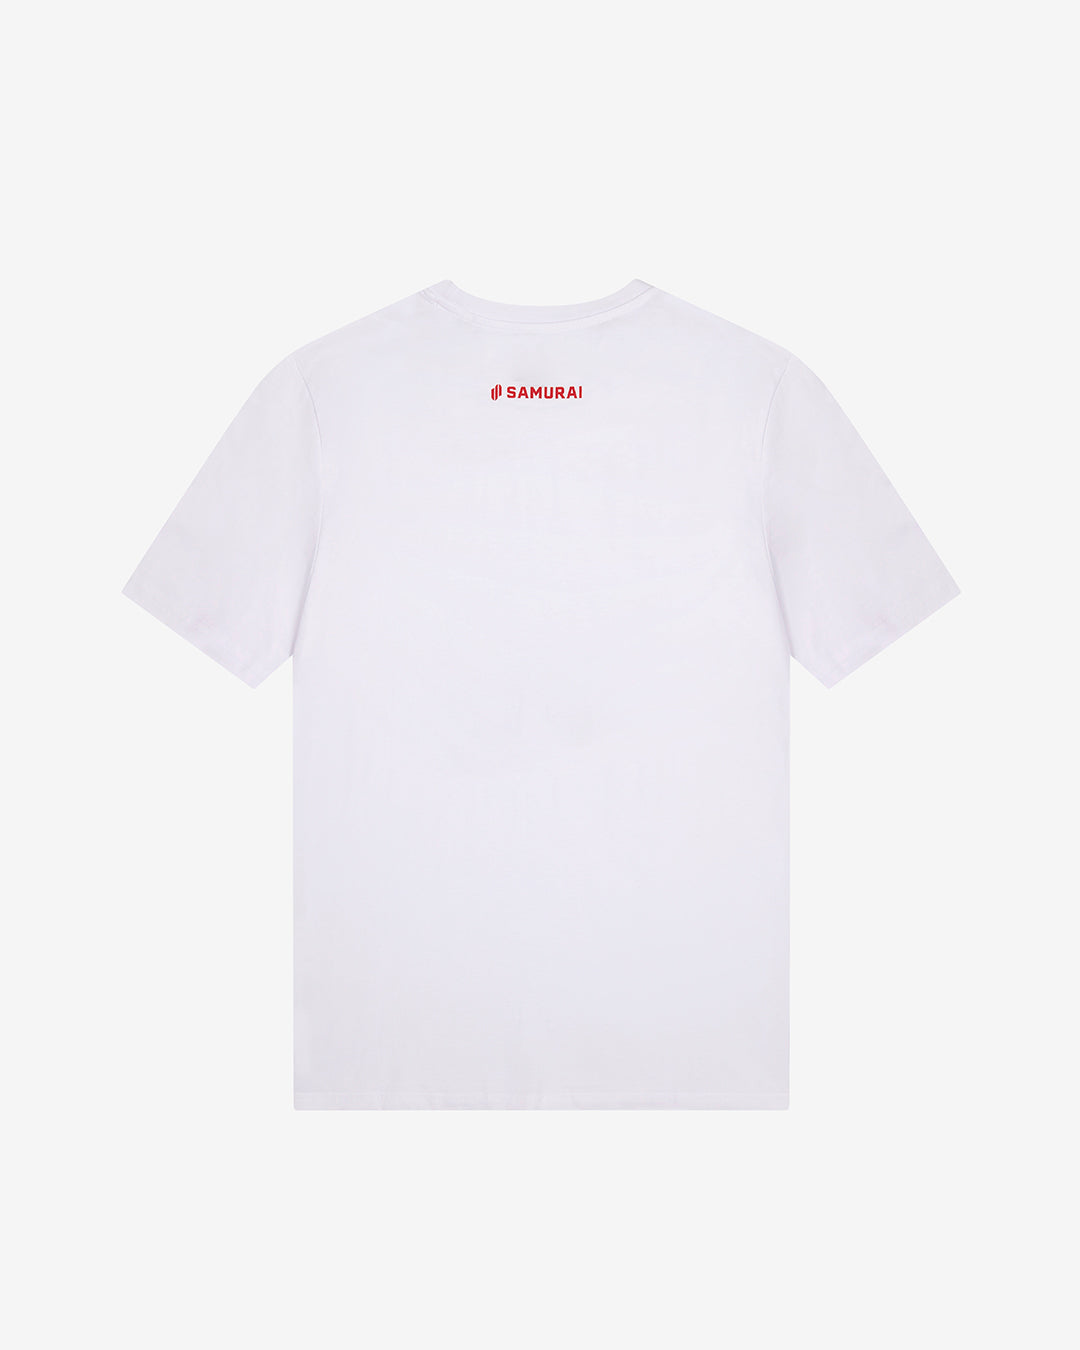 ED7:13 - Good Vibes T-Shirt - White